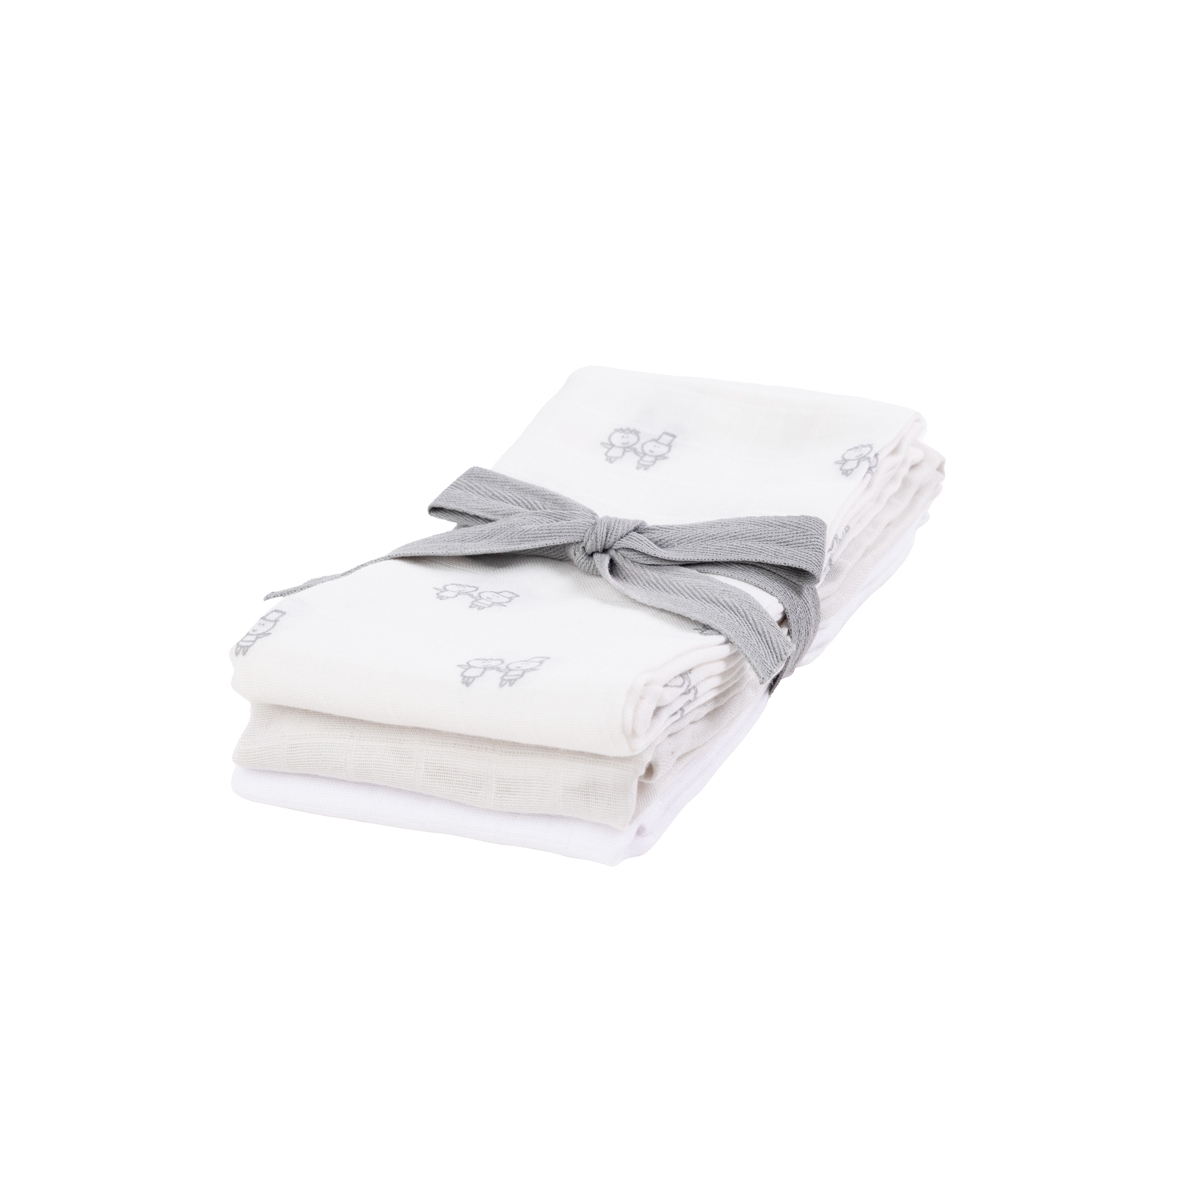 Kiki & Sebby 100% Cotton Pack of 3 Muslin Swaddle Blankets – Kiki & Sebby Logo/Grey/White